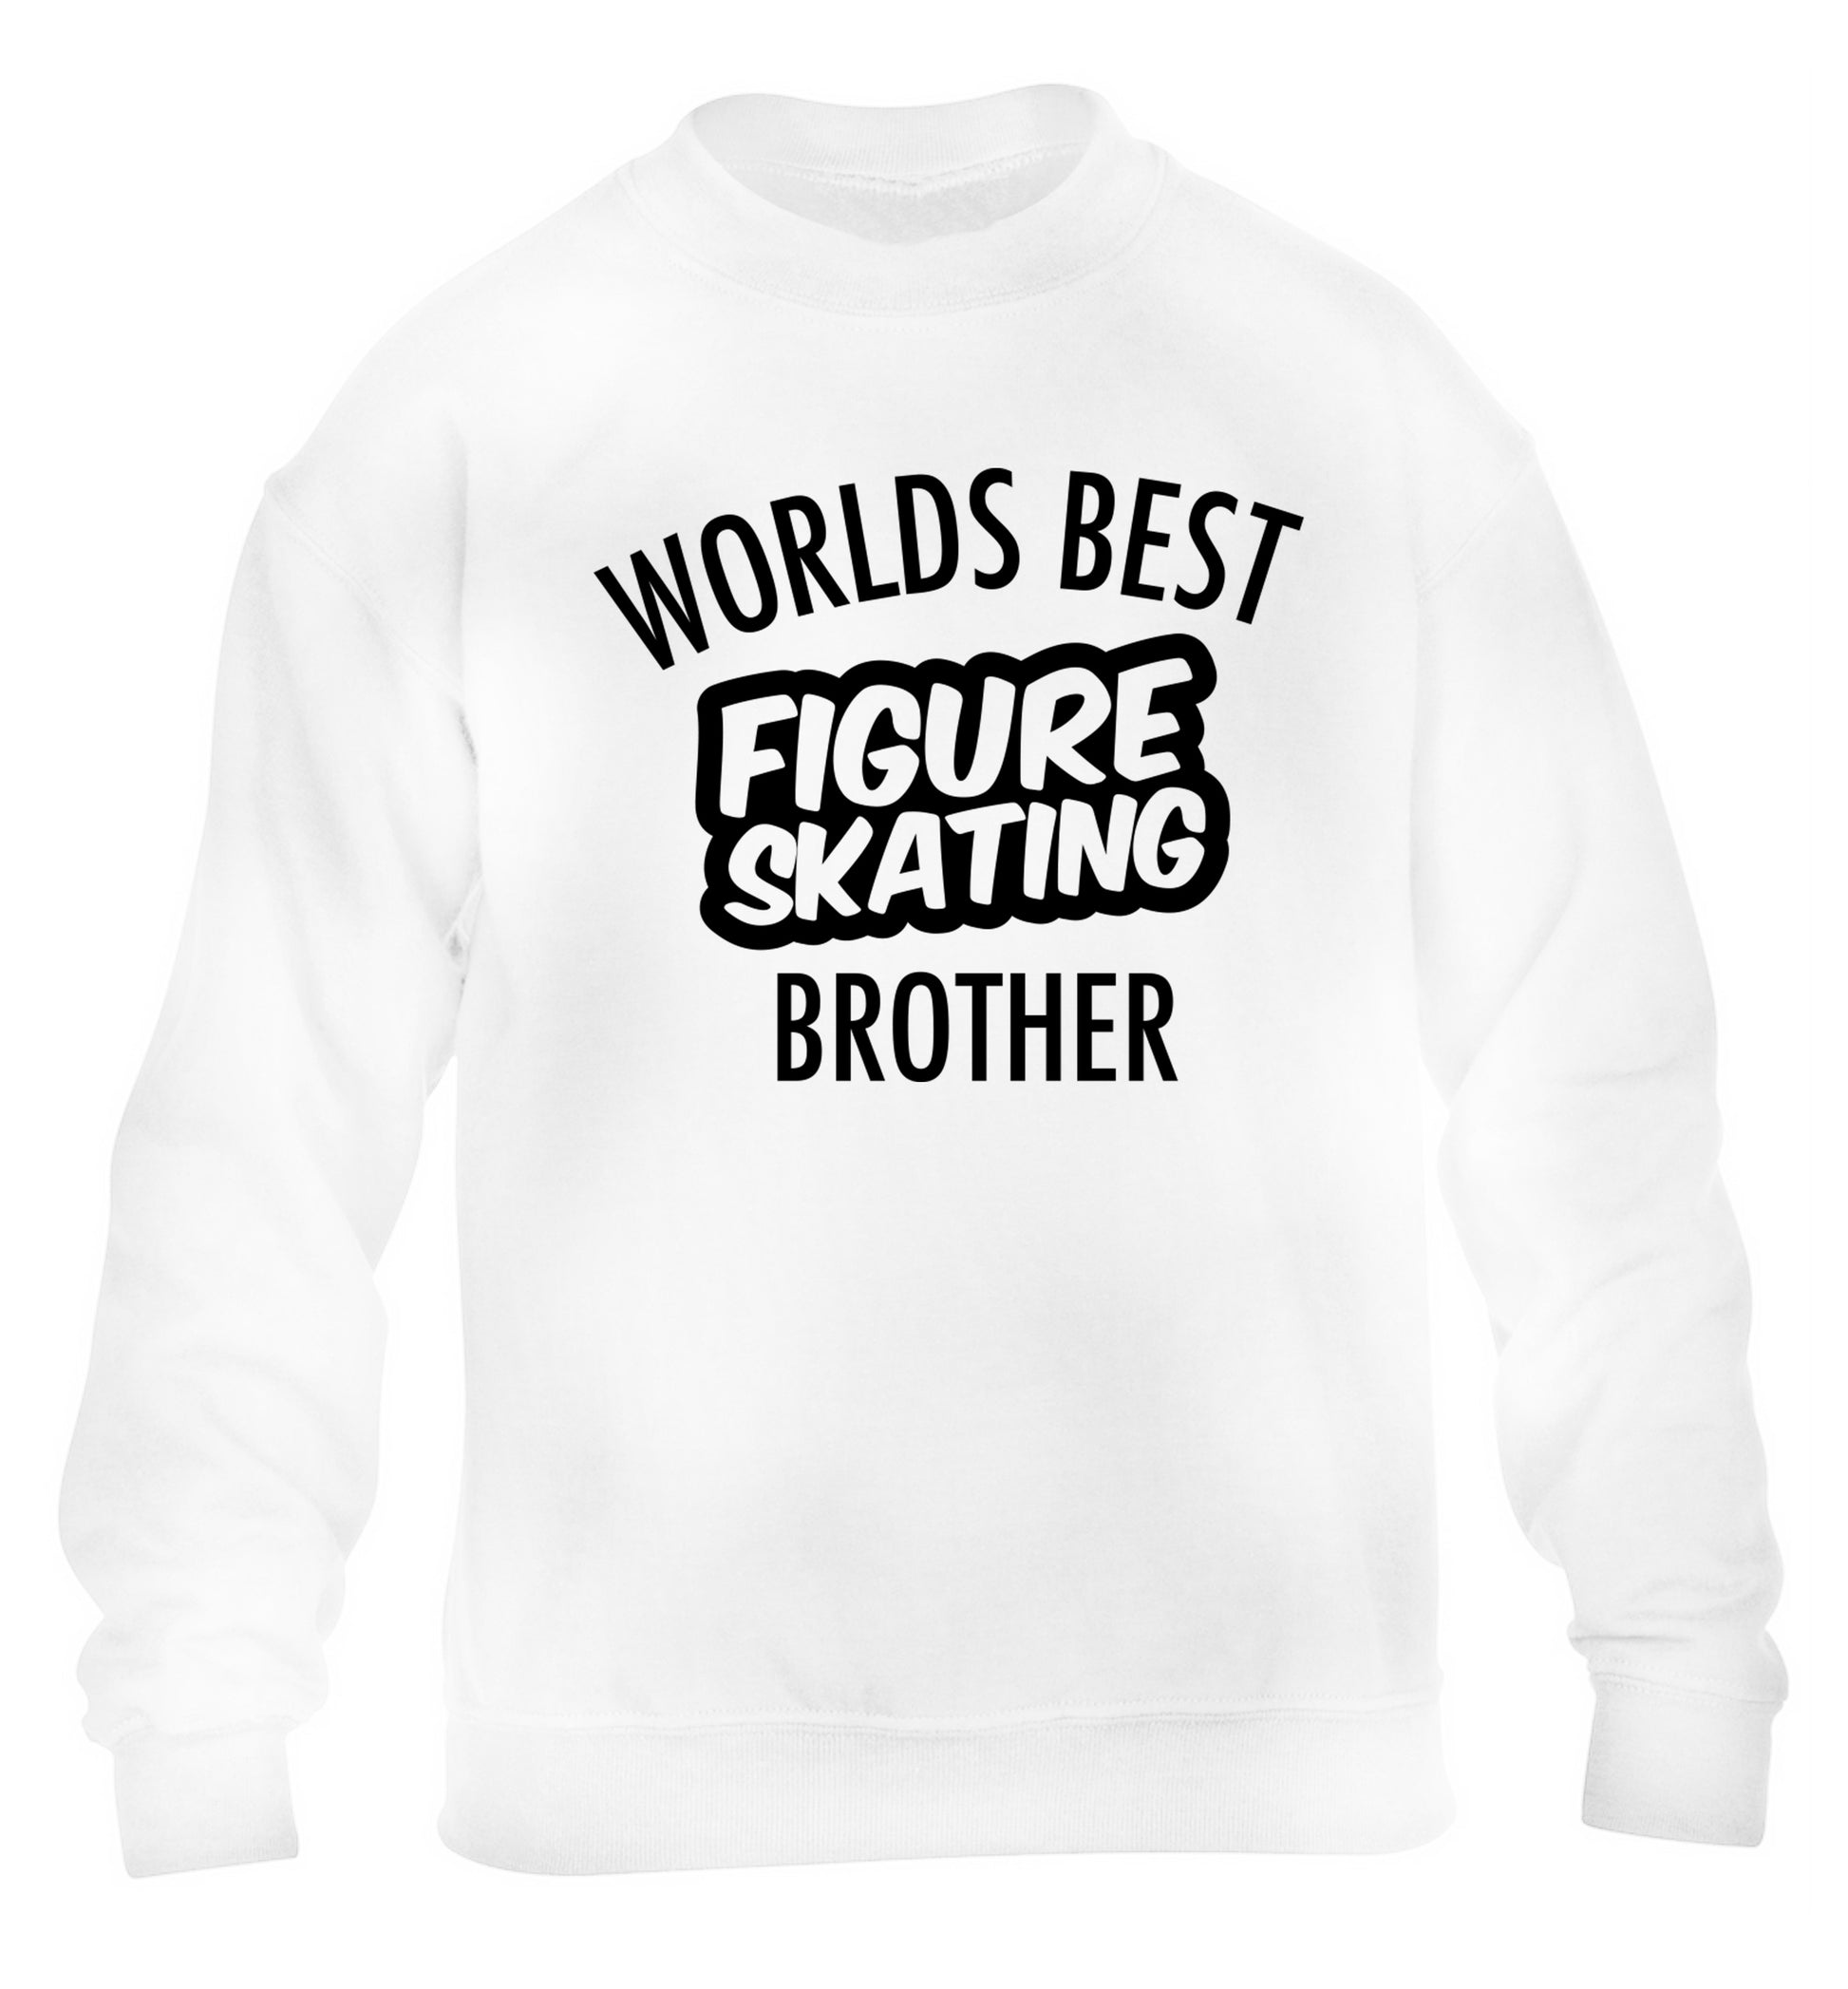 Worlds best figure skating brother children's white sweater 12-14 Years